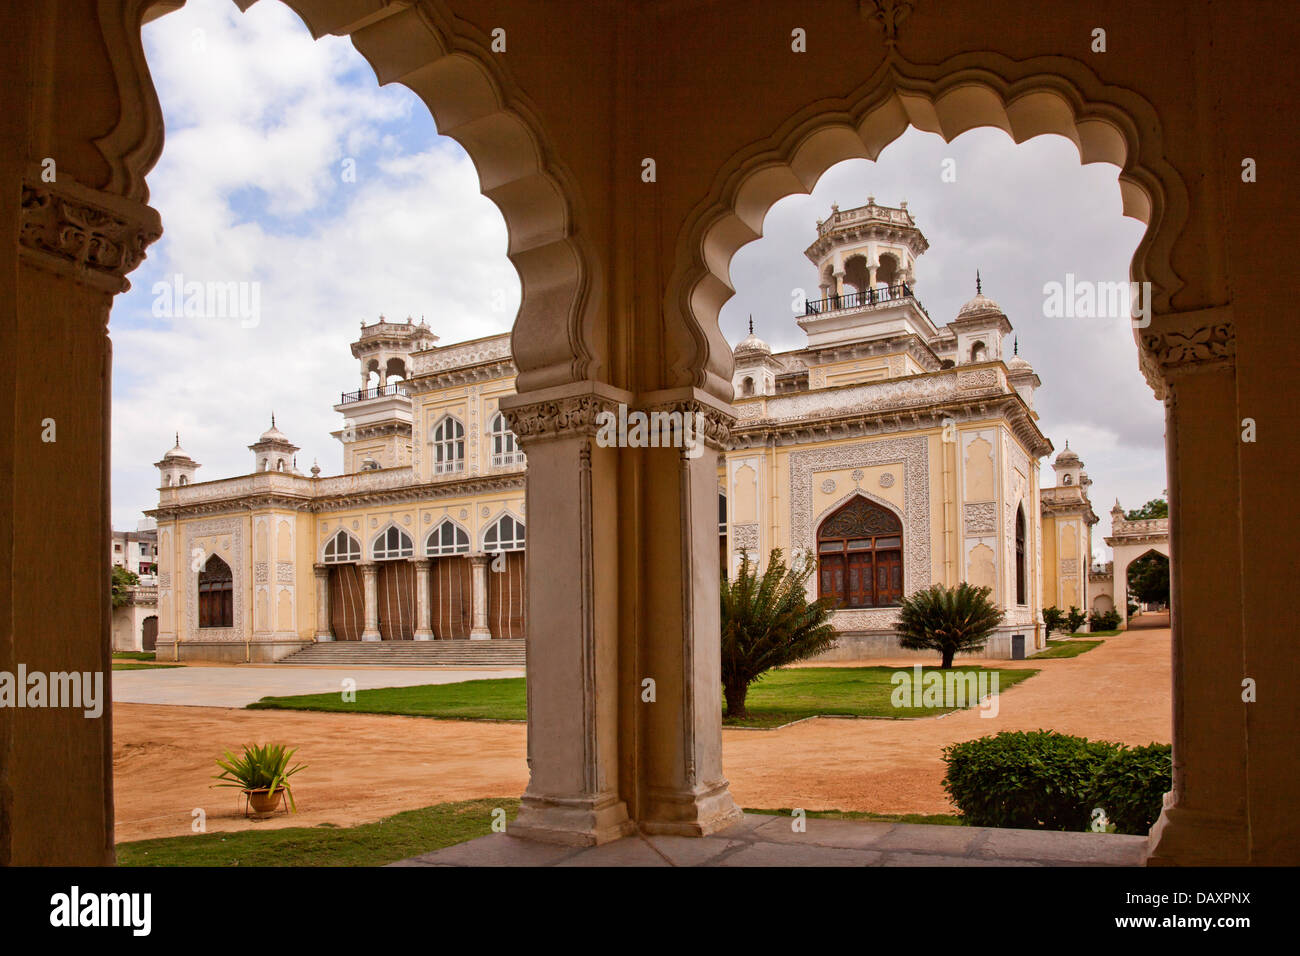 Façade d'un palais vue par arch, Chowmahalla Palace, Hyderabad, Andhra Pradesh, Inde Banque D'Images